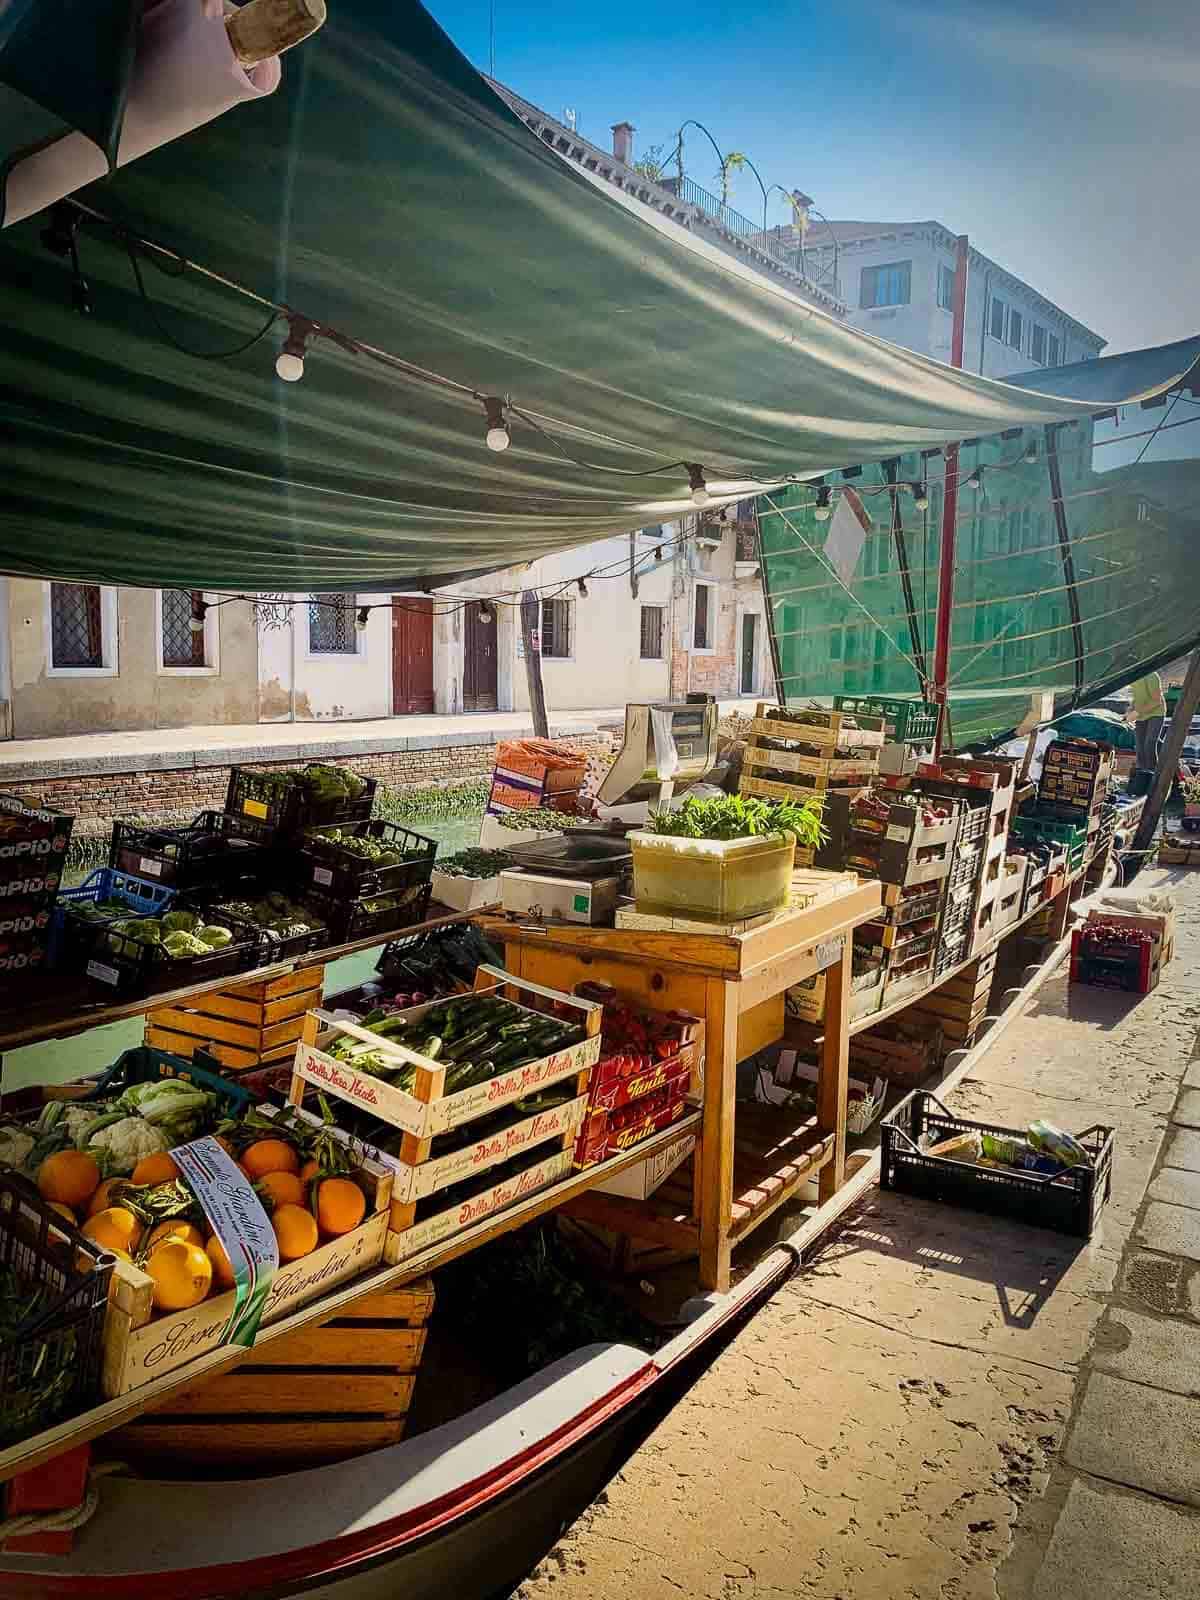 mercado flotante con frutas de temporada en marzo.